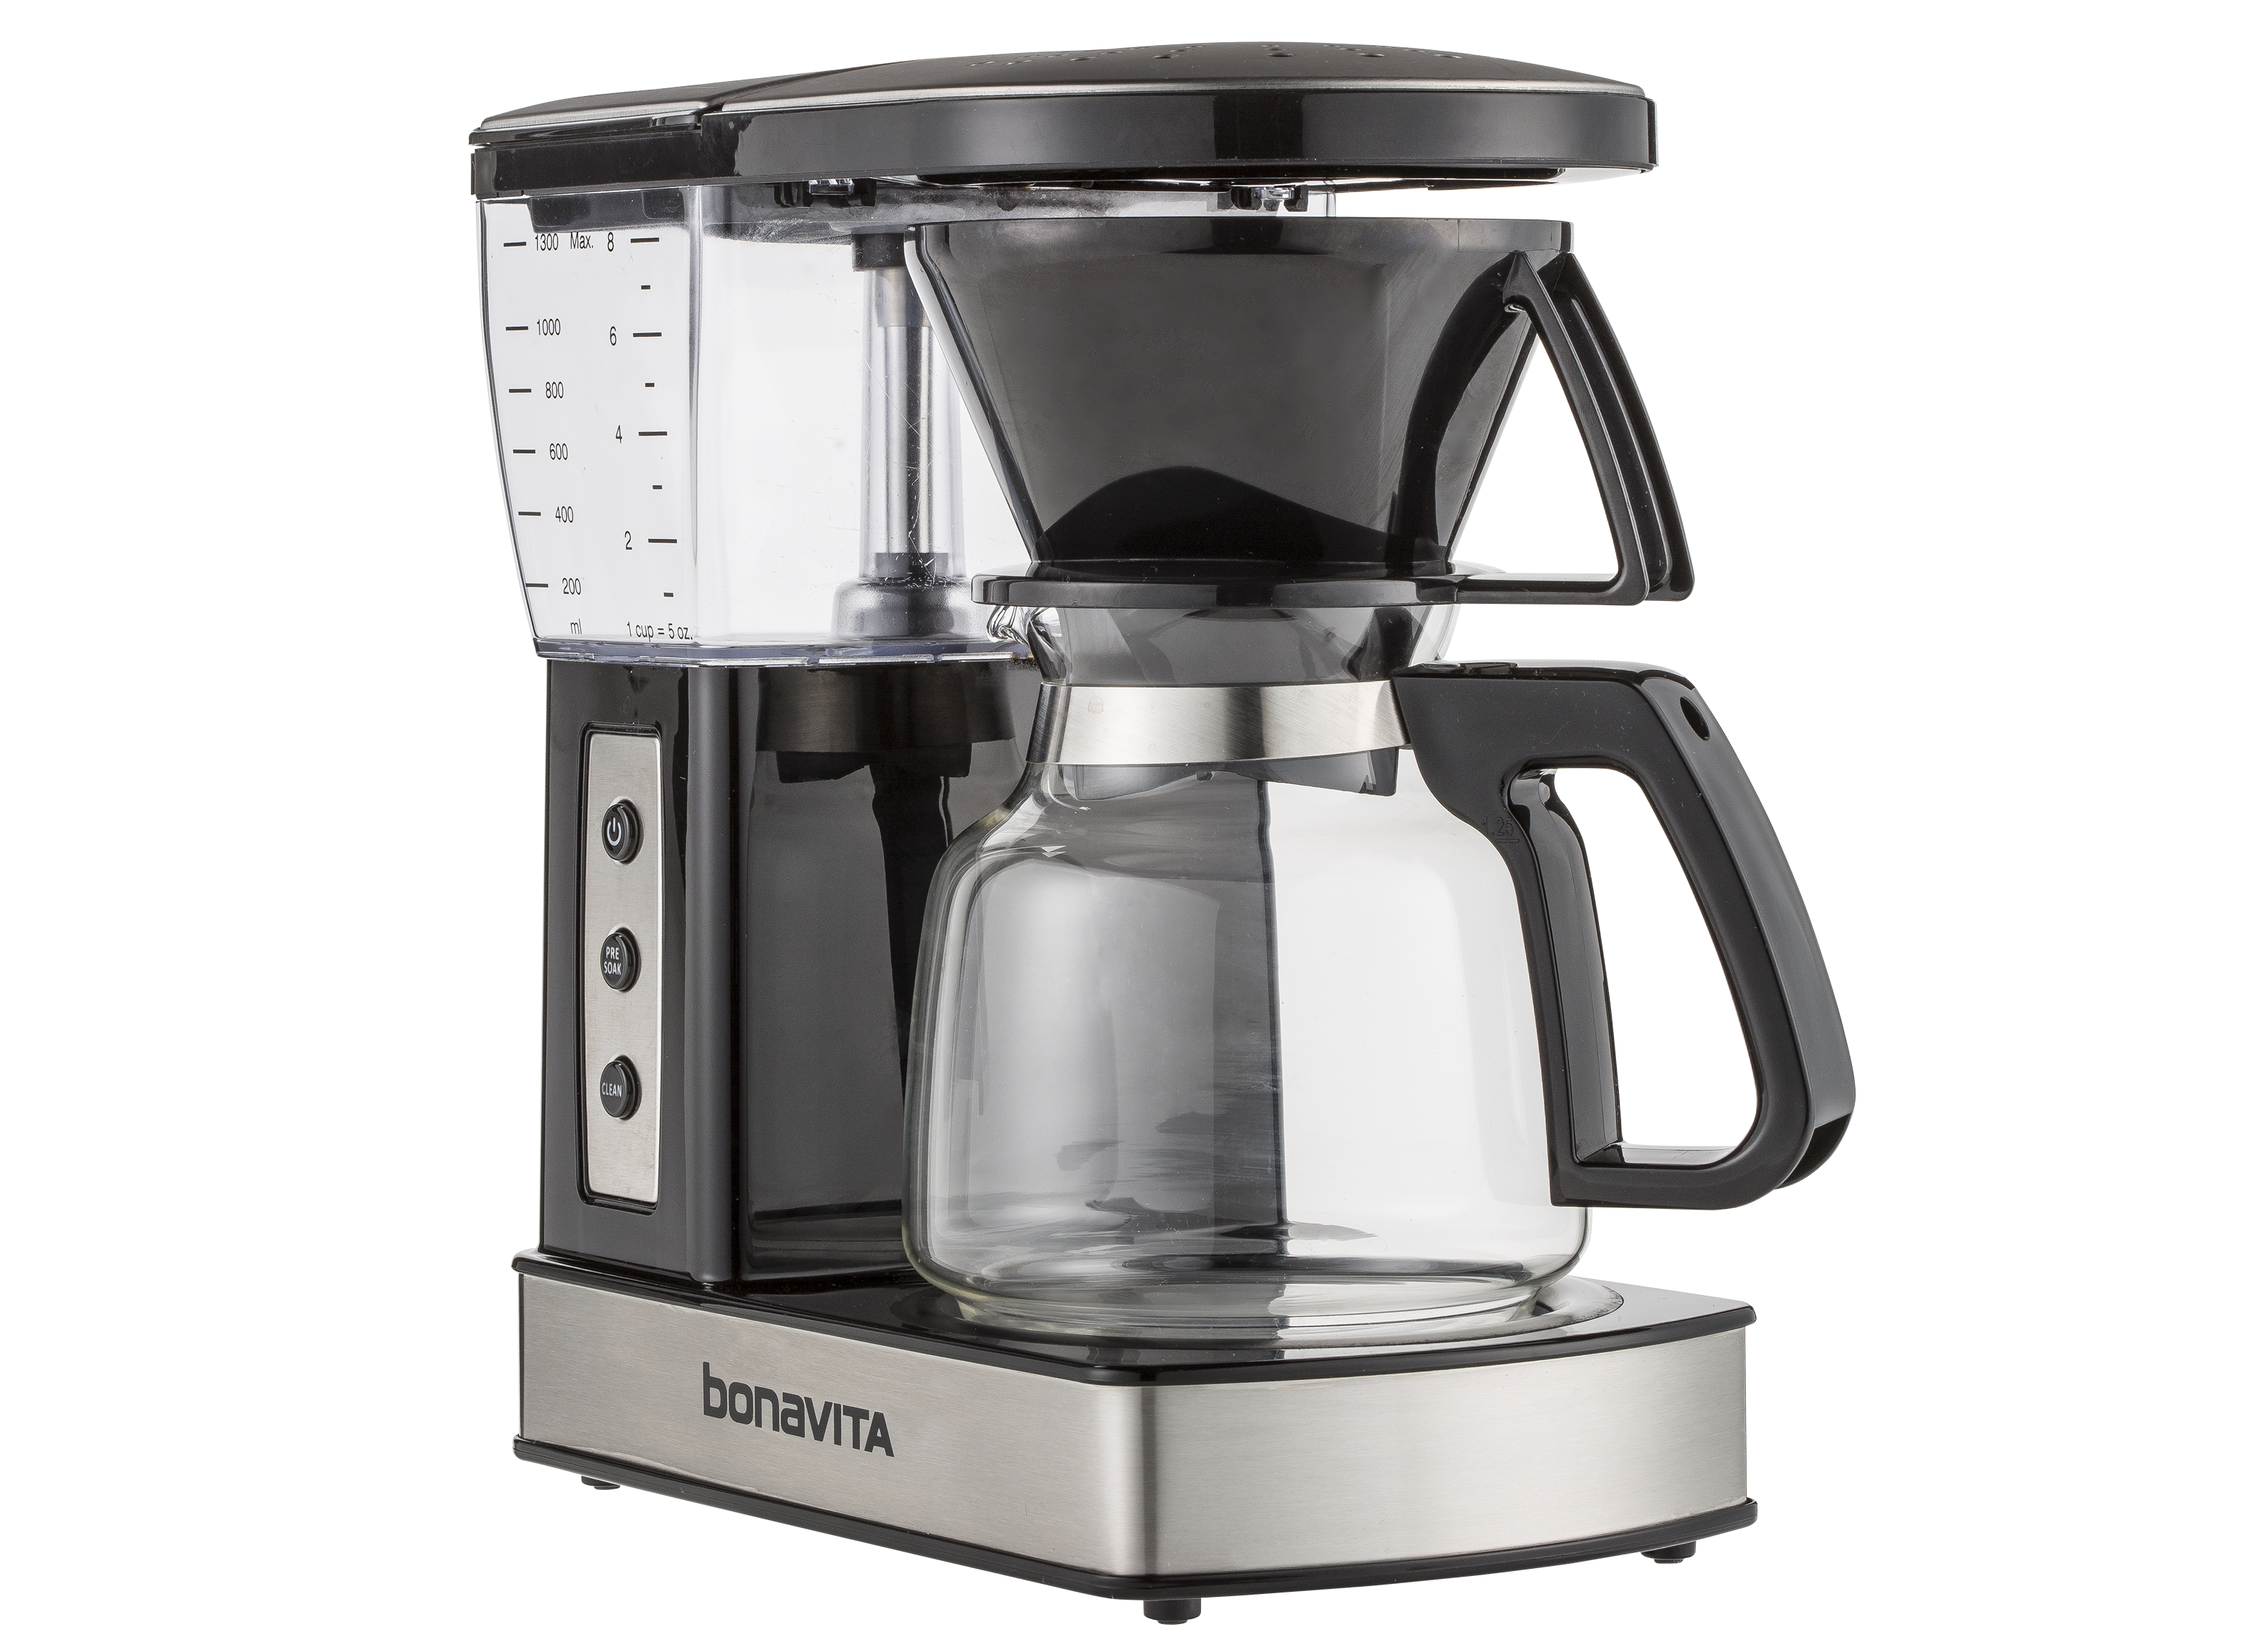 Bonavita BV01002US Coffee Maker Review - Consumer Reports